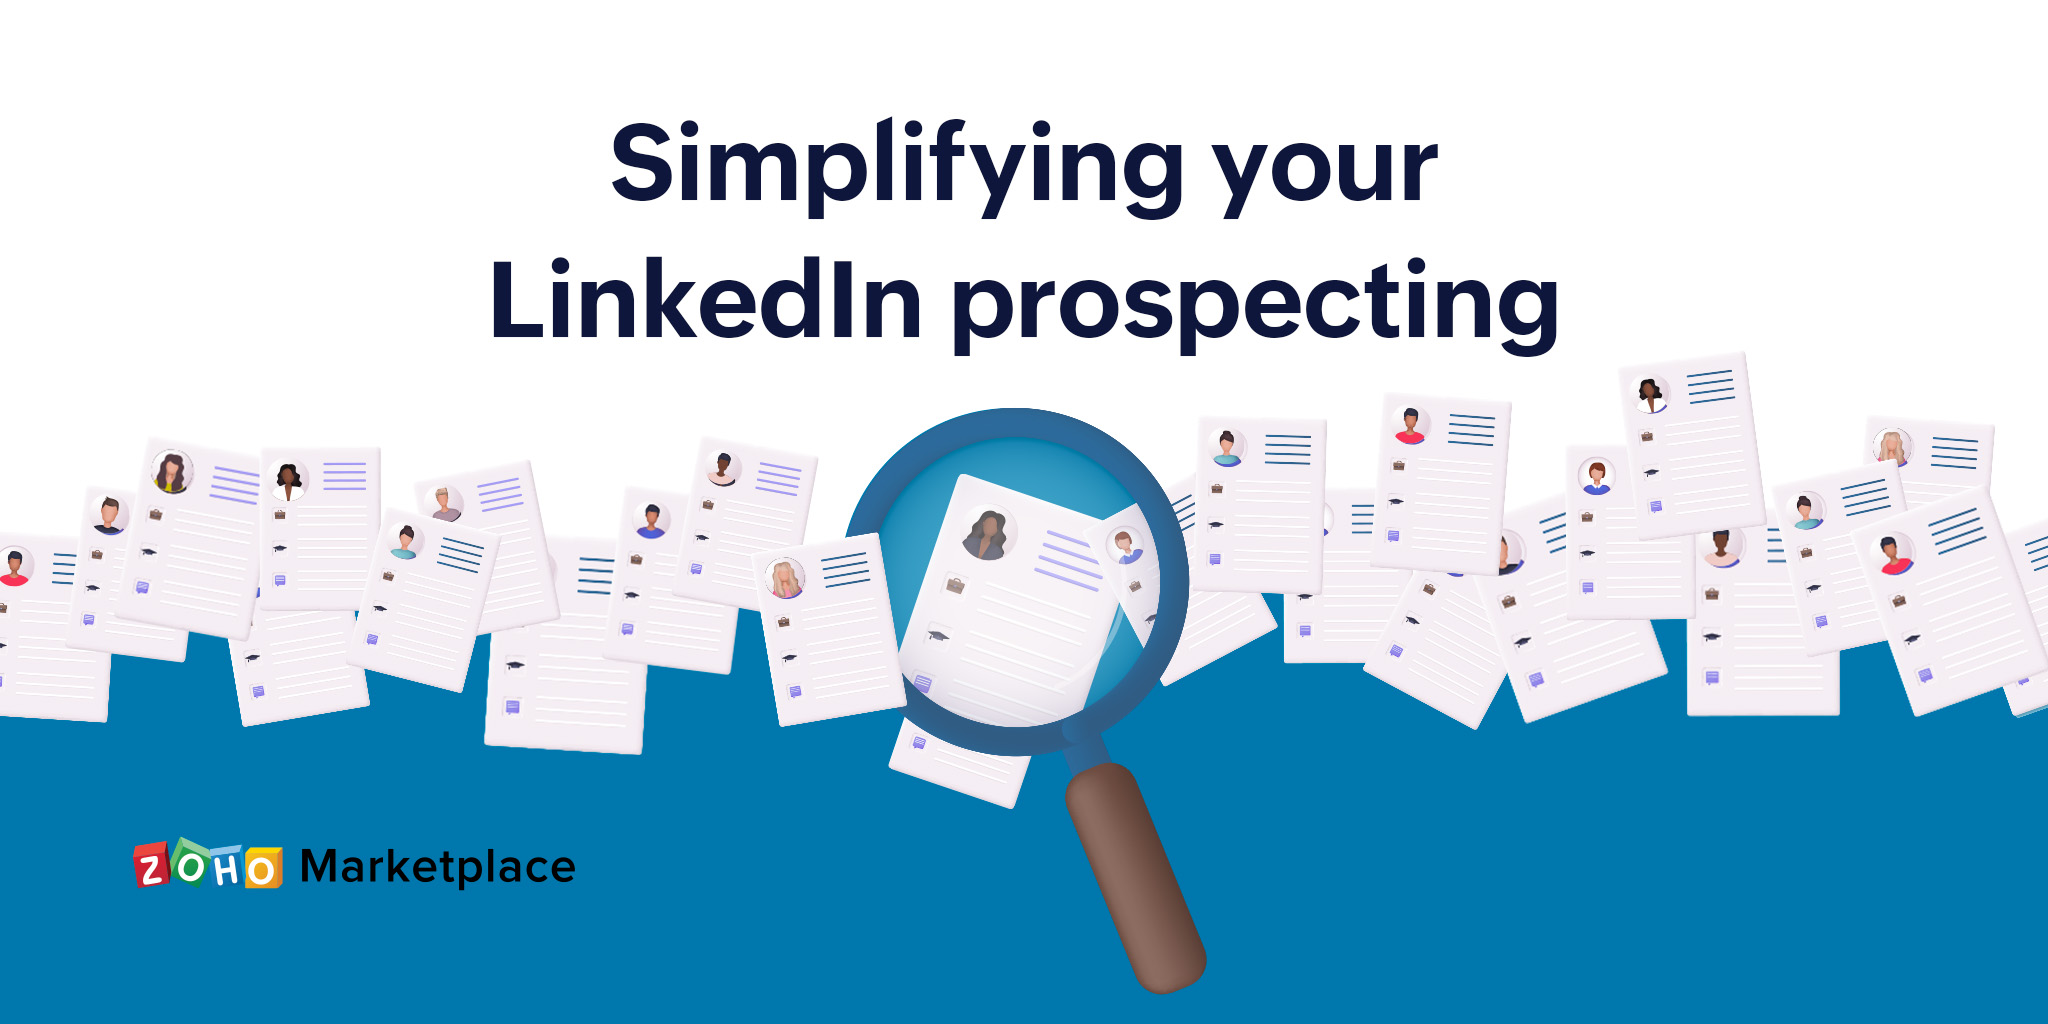 Simplifying your LinkedIn prospecting